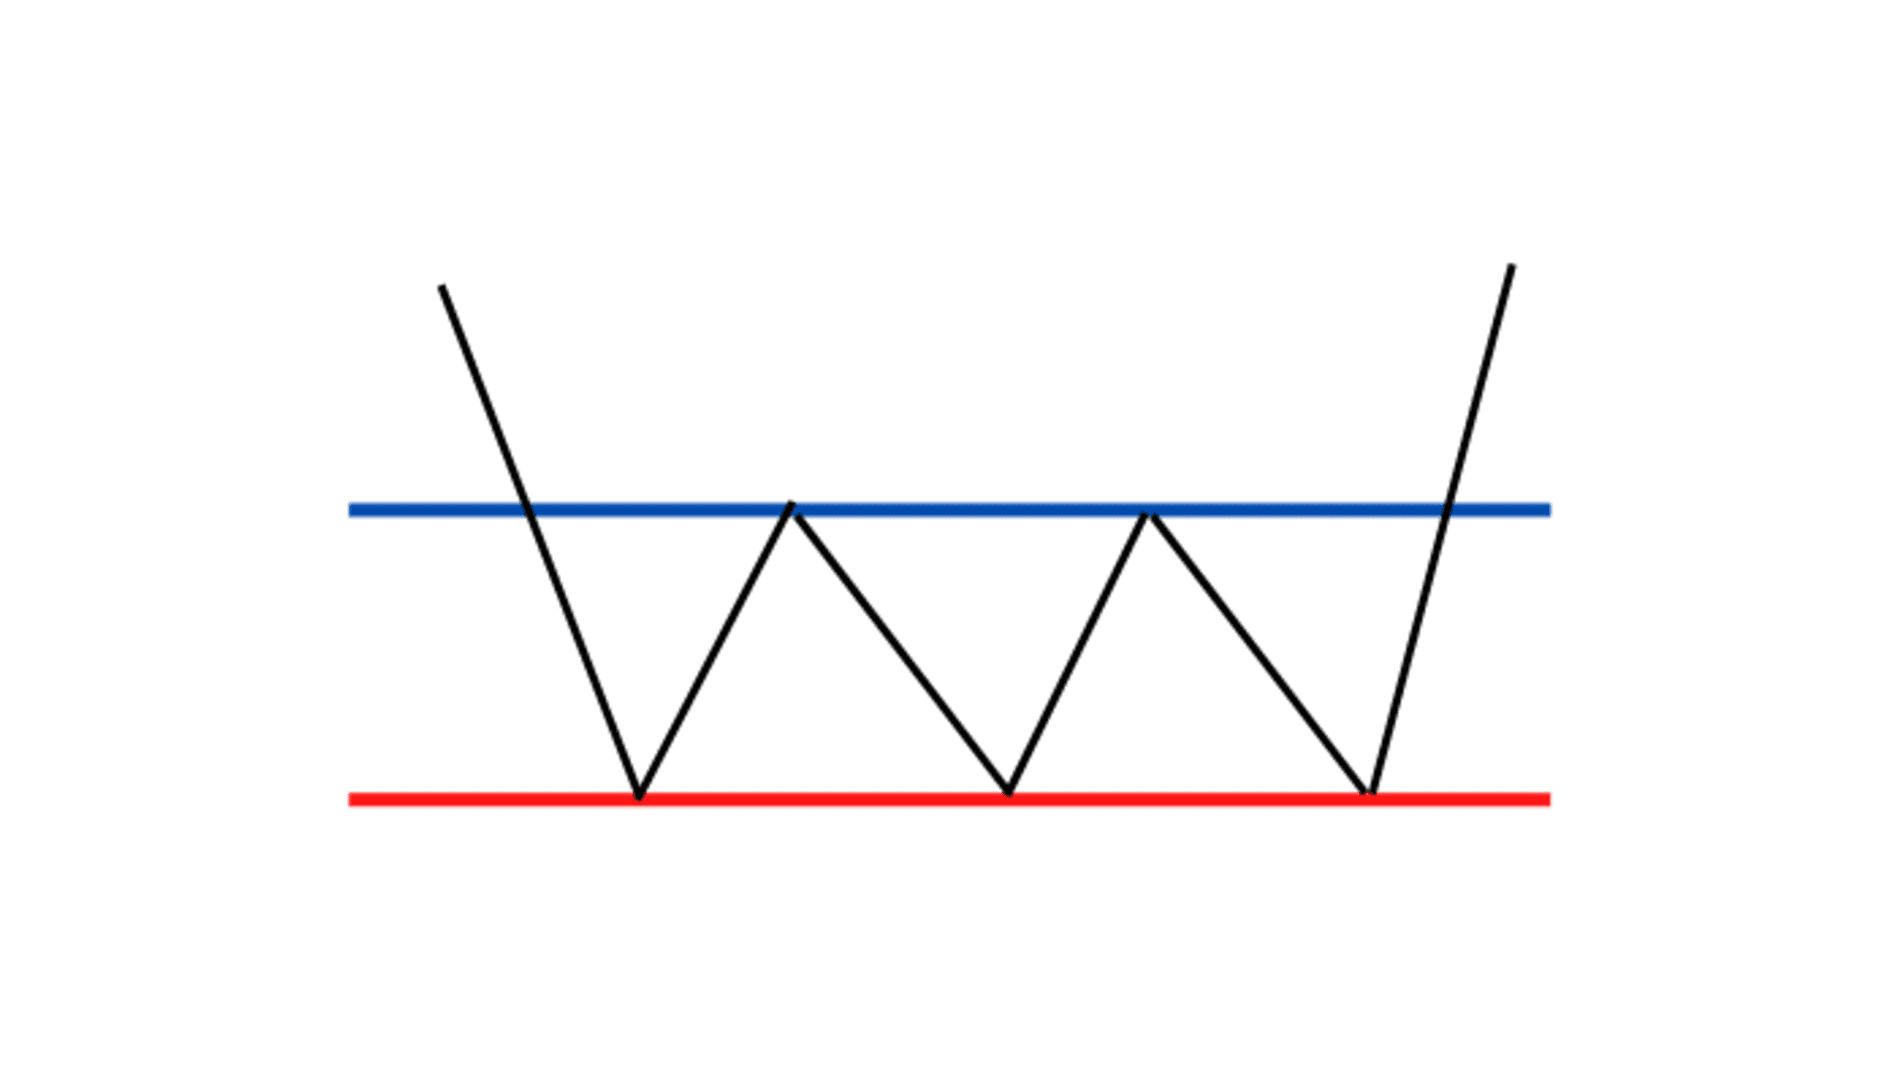 grafik triple bottom pattern